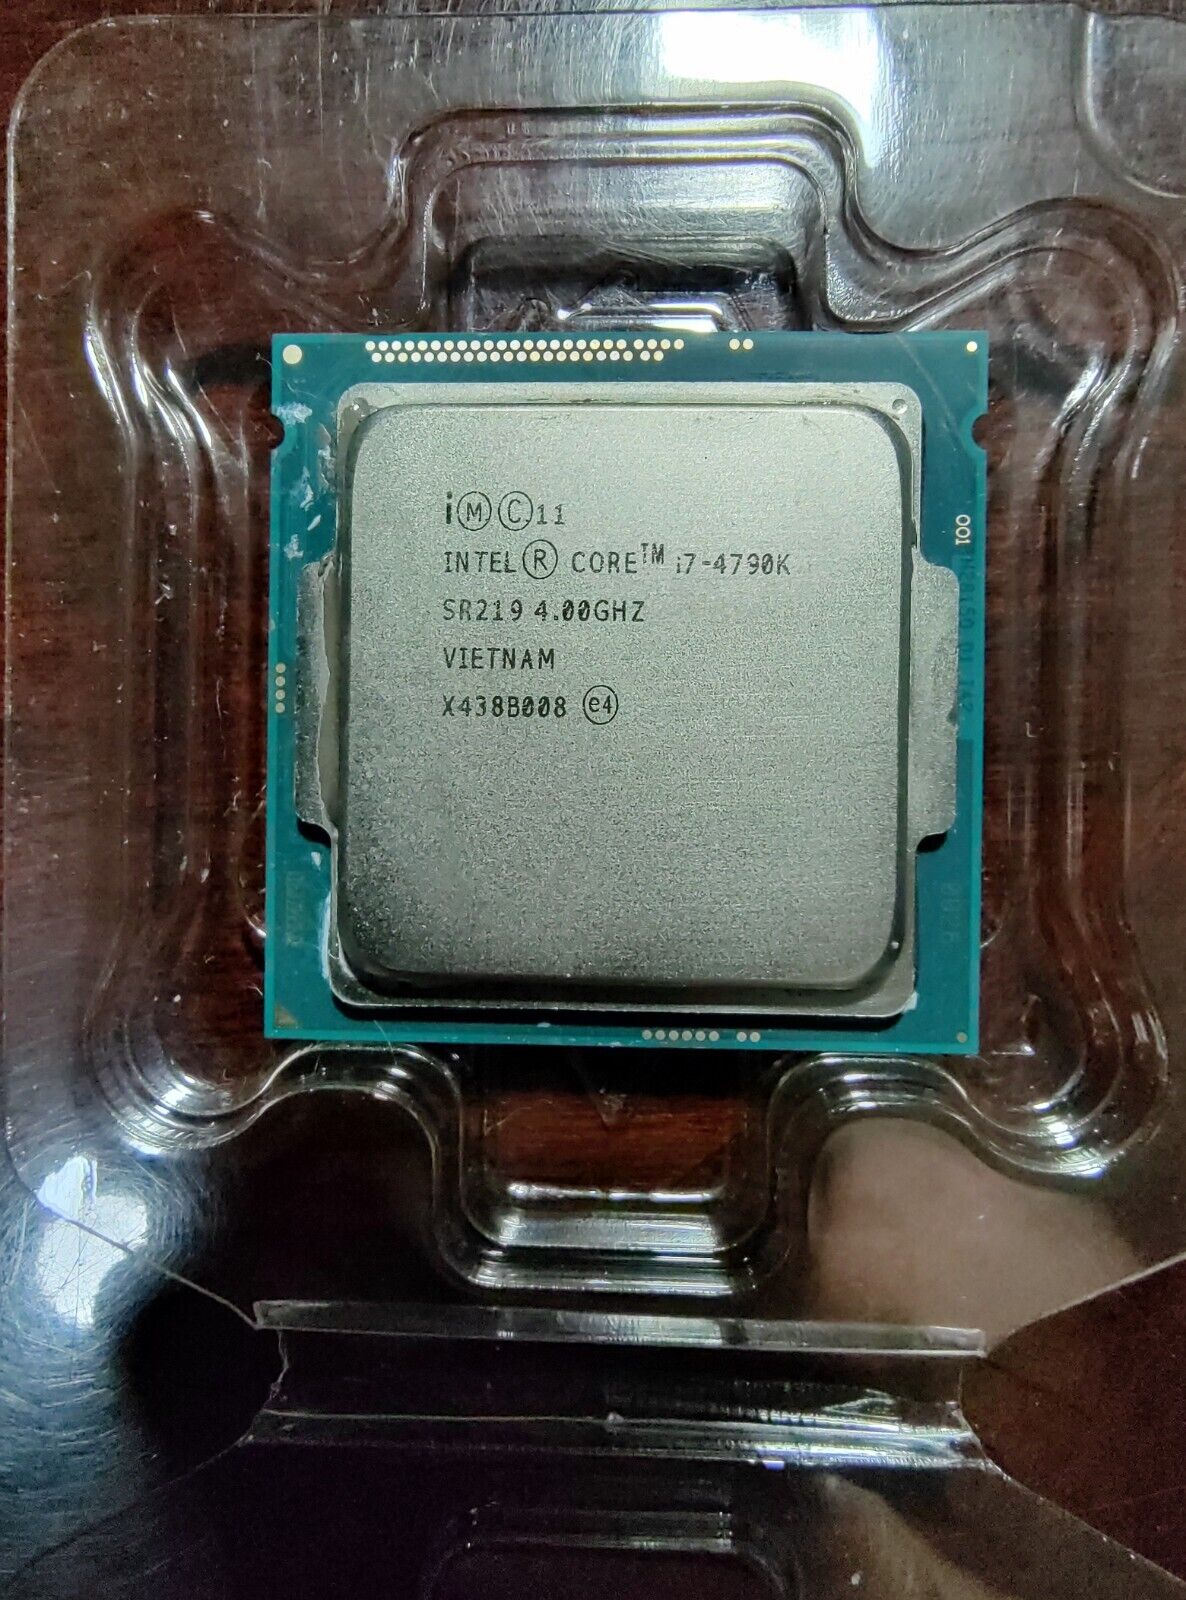 Intel Core™ i7-4790K up to 4.40 GHz Quad Core Processor